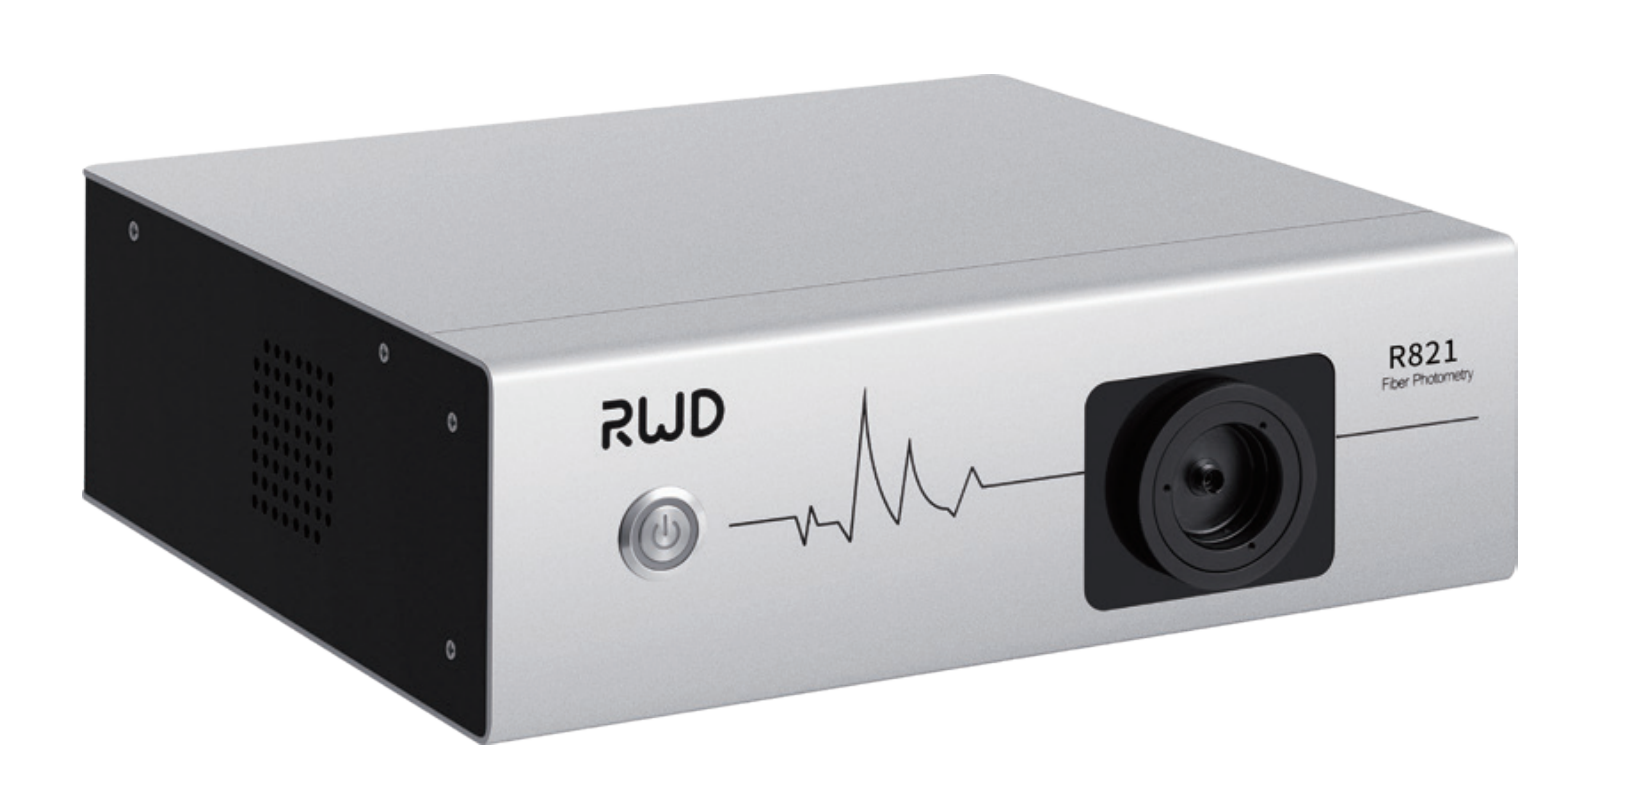 R821 Tricolor Multichannel Fiber Photometry System